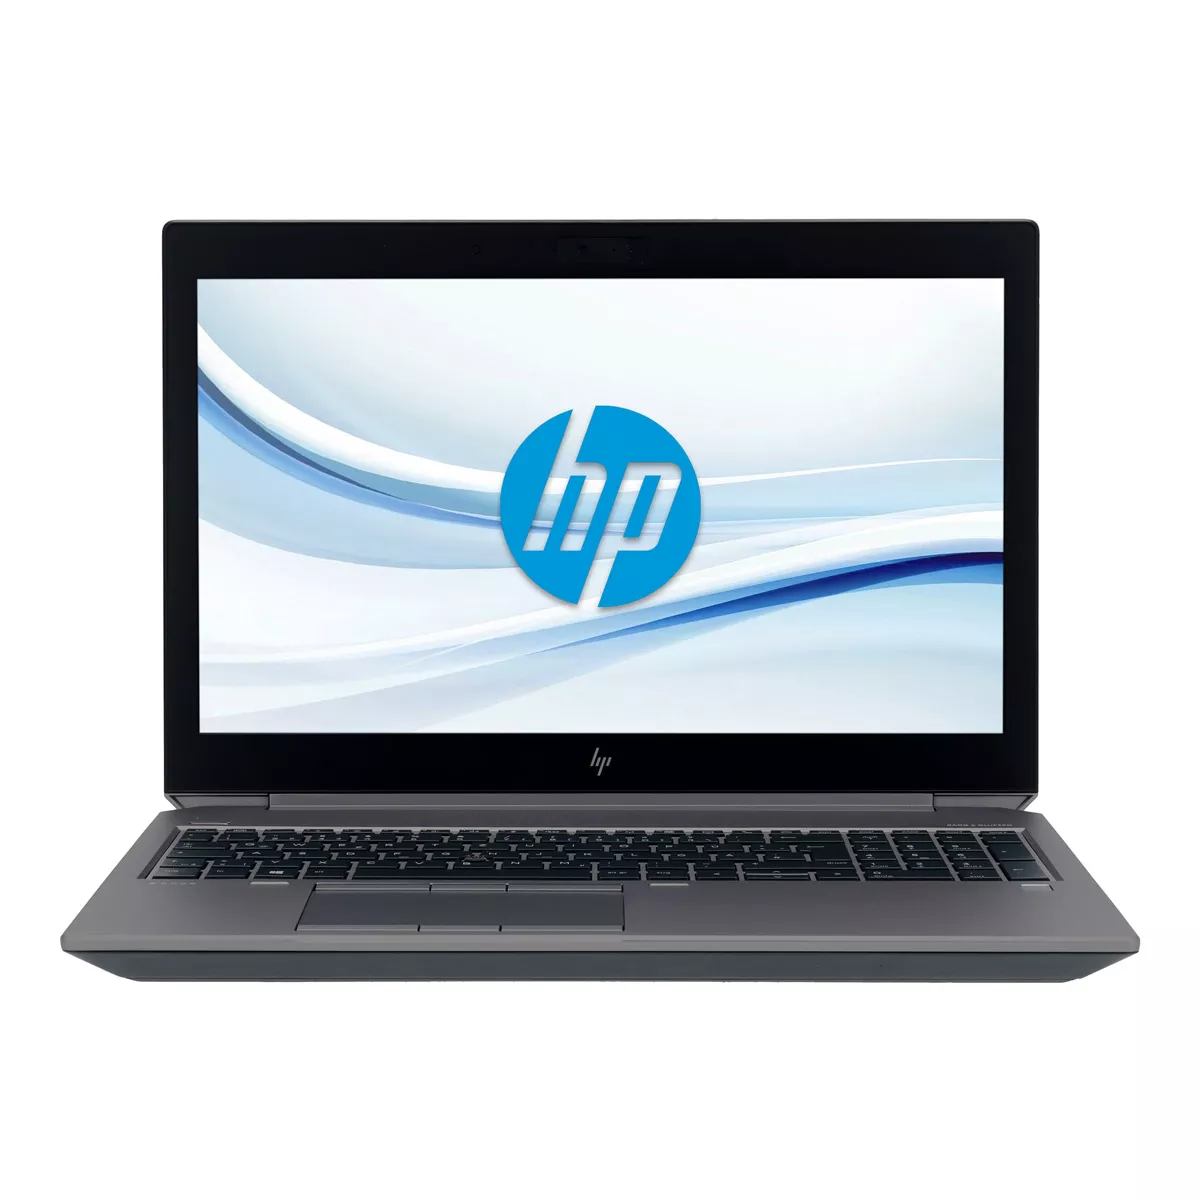 HP ZBook 15 G5 Core i7 8850H nVidia Quadro P2000M 16 GB 500 GB M.2 SSD Webcam B